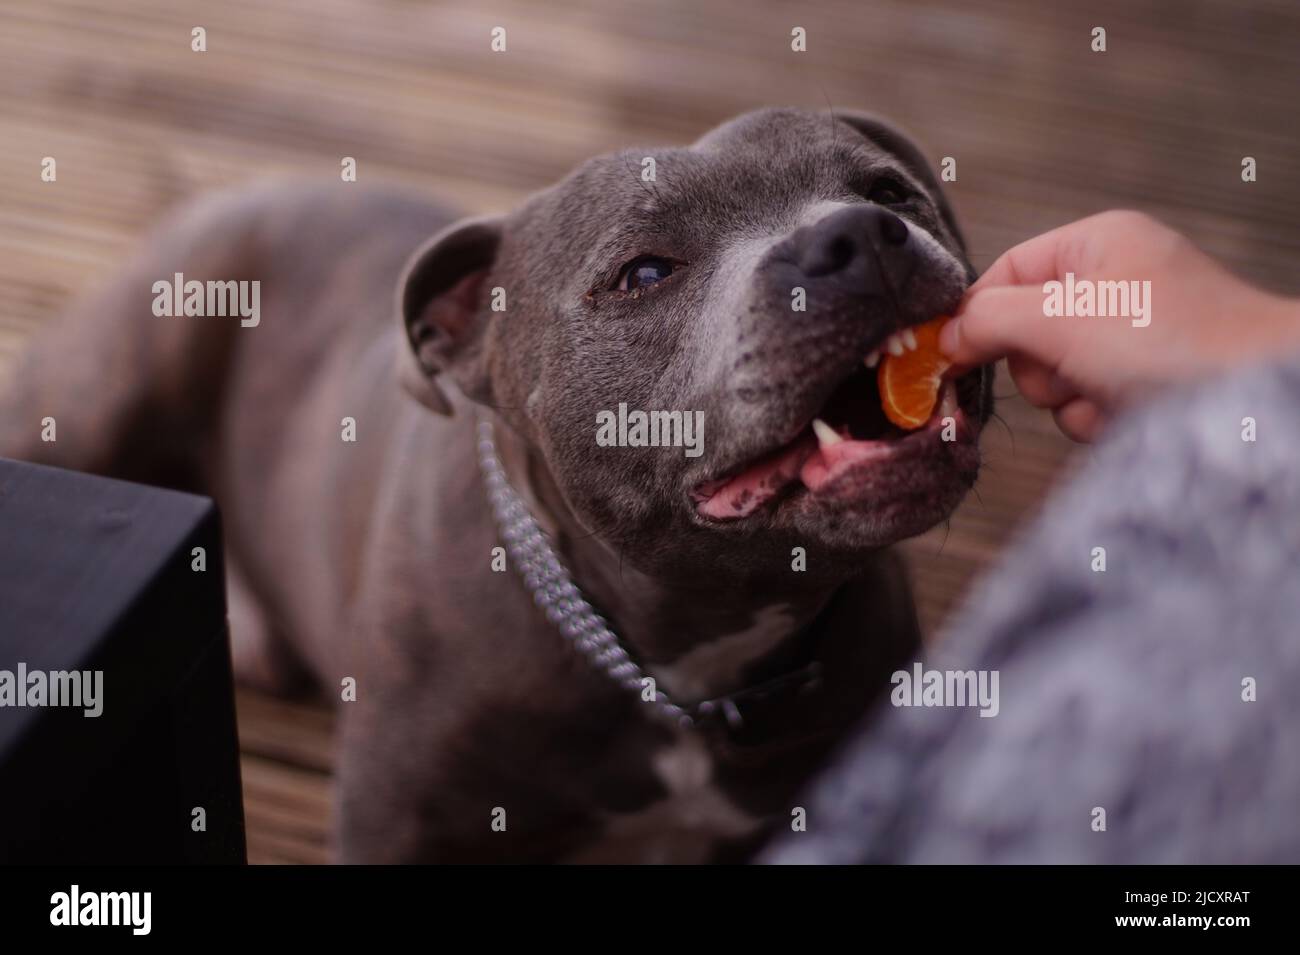 Staffordshire Bull Terrier face on eating an Orange Stock Photo